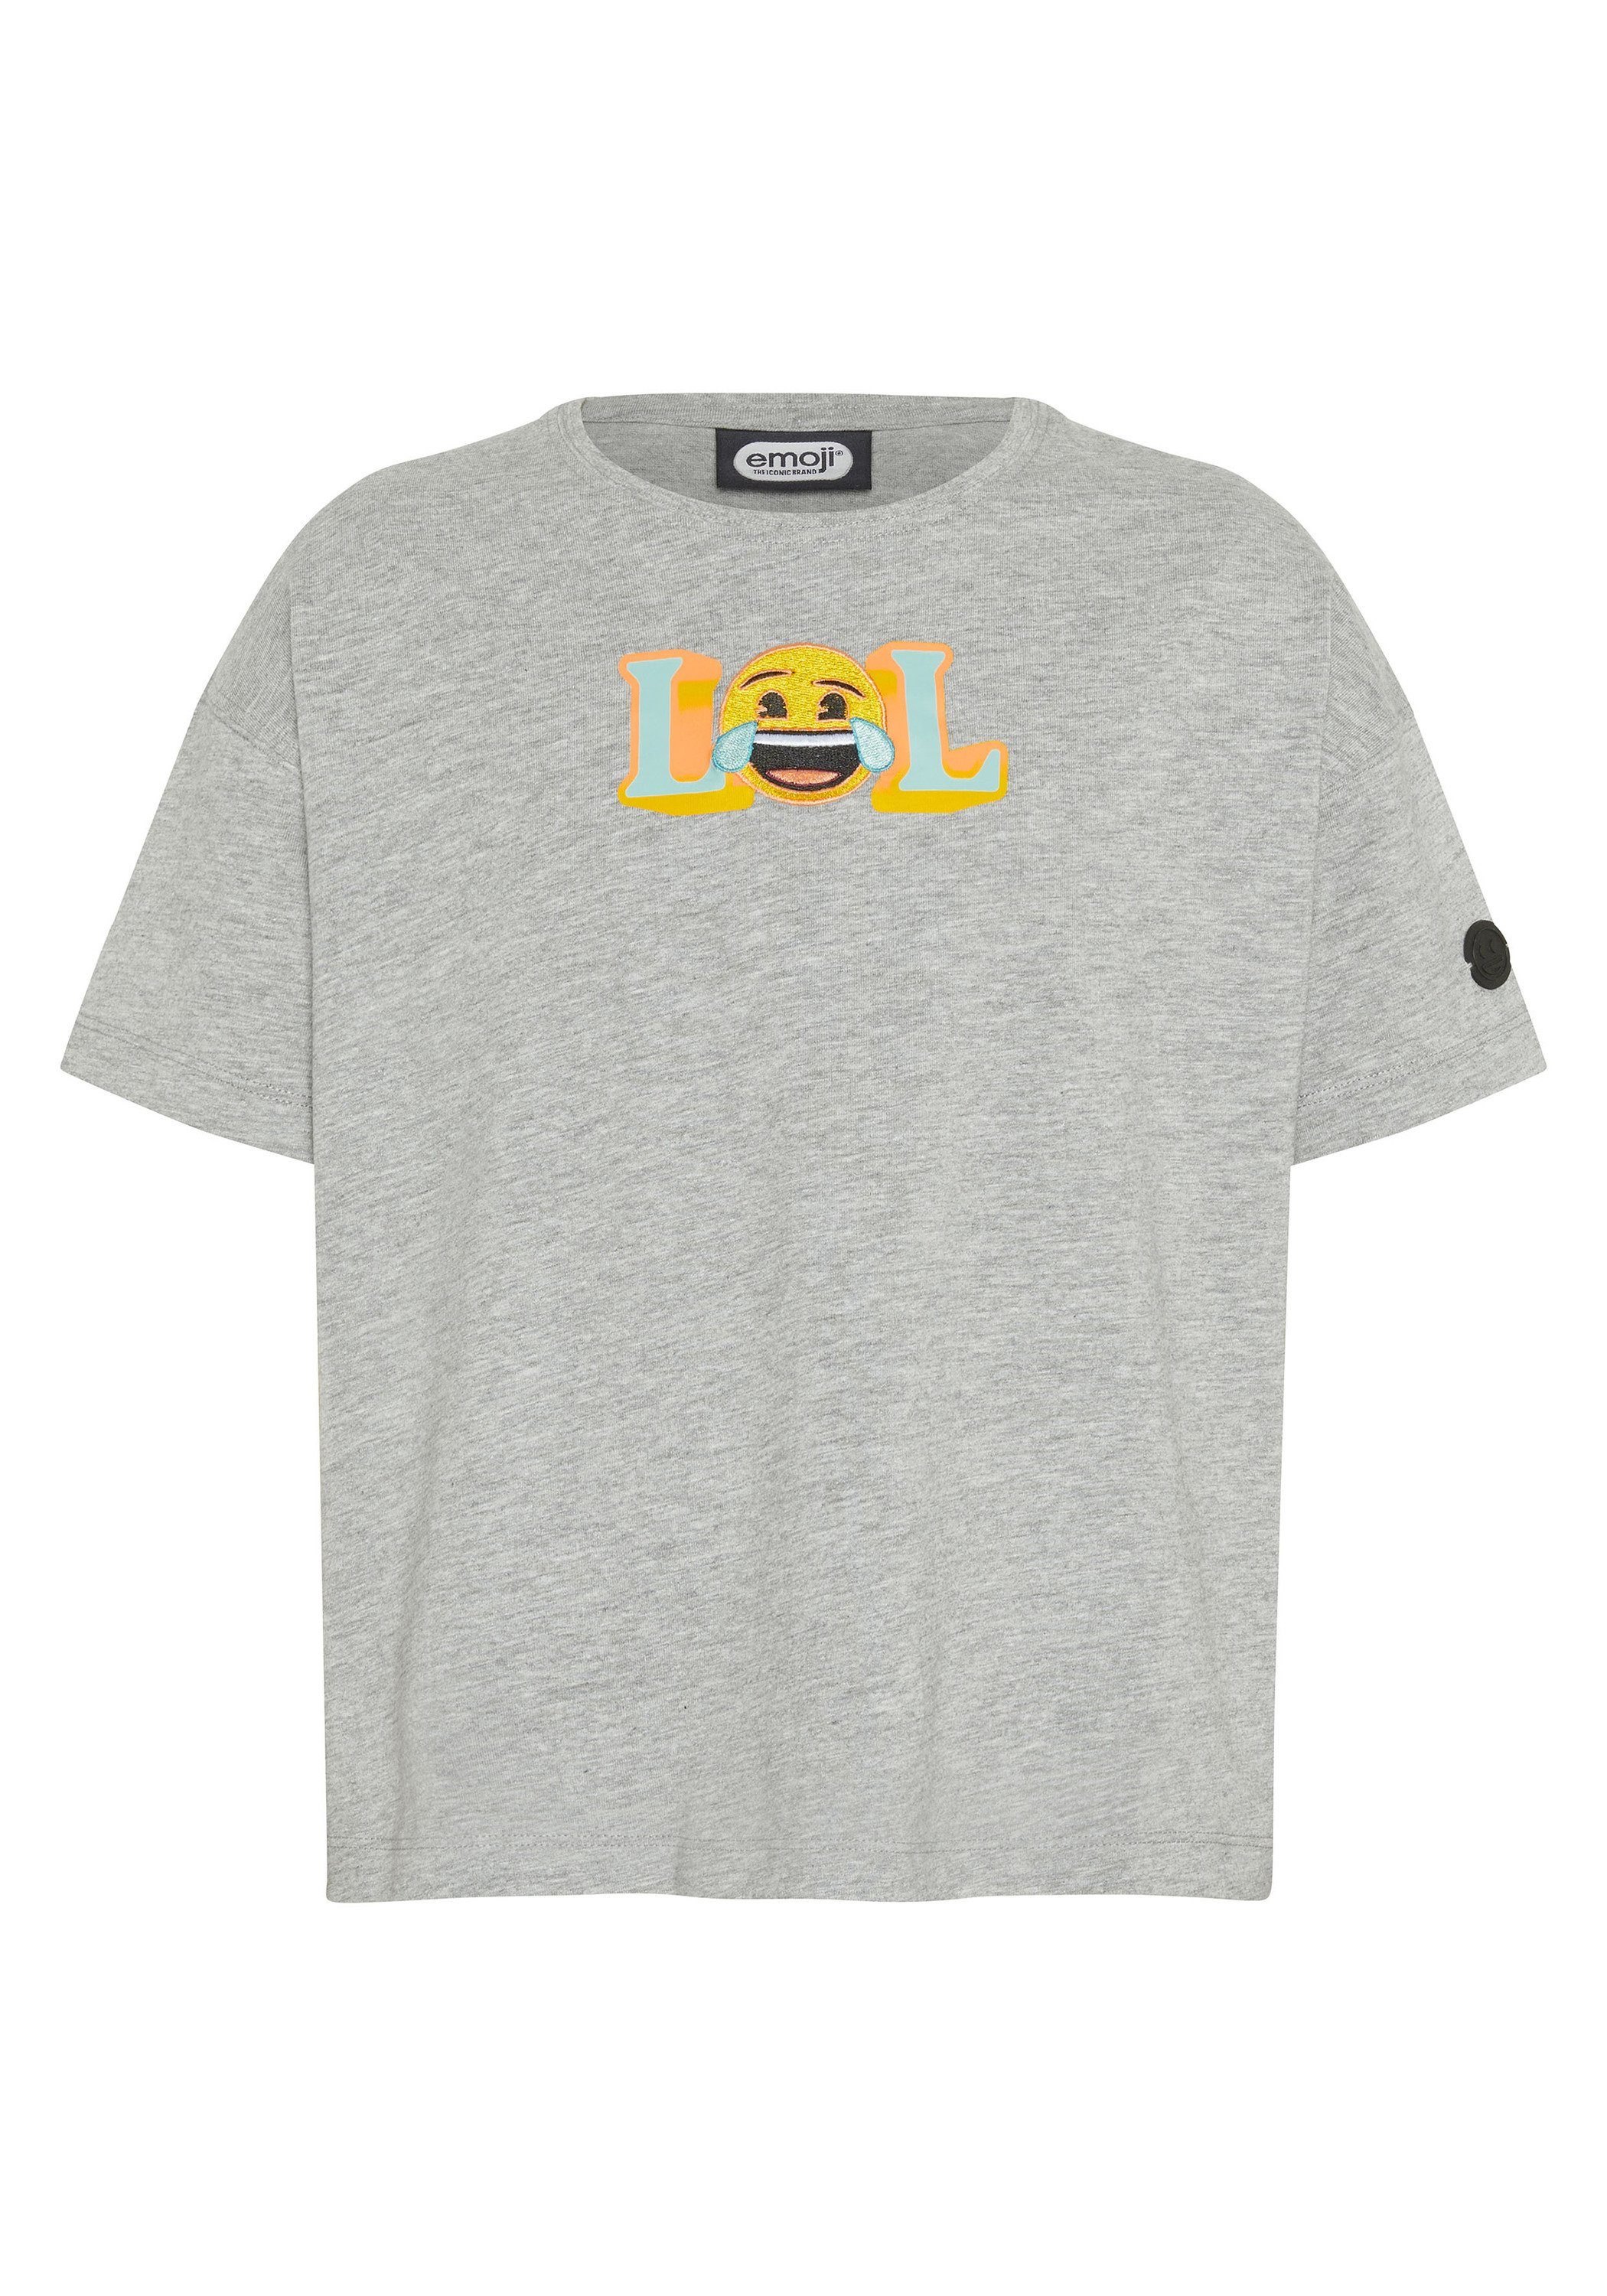 Emoji Print-Shirt im LOL-Design